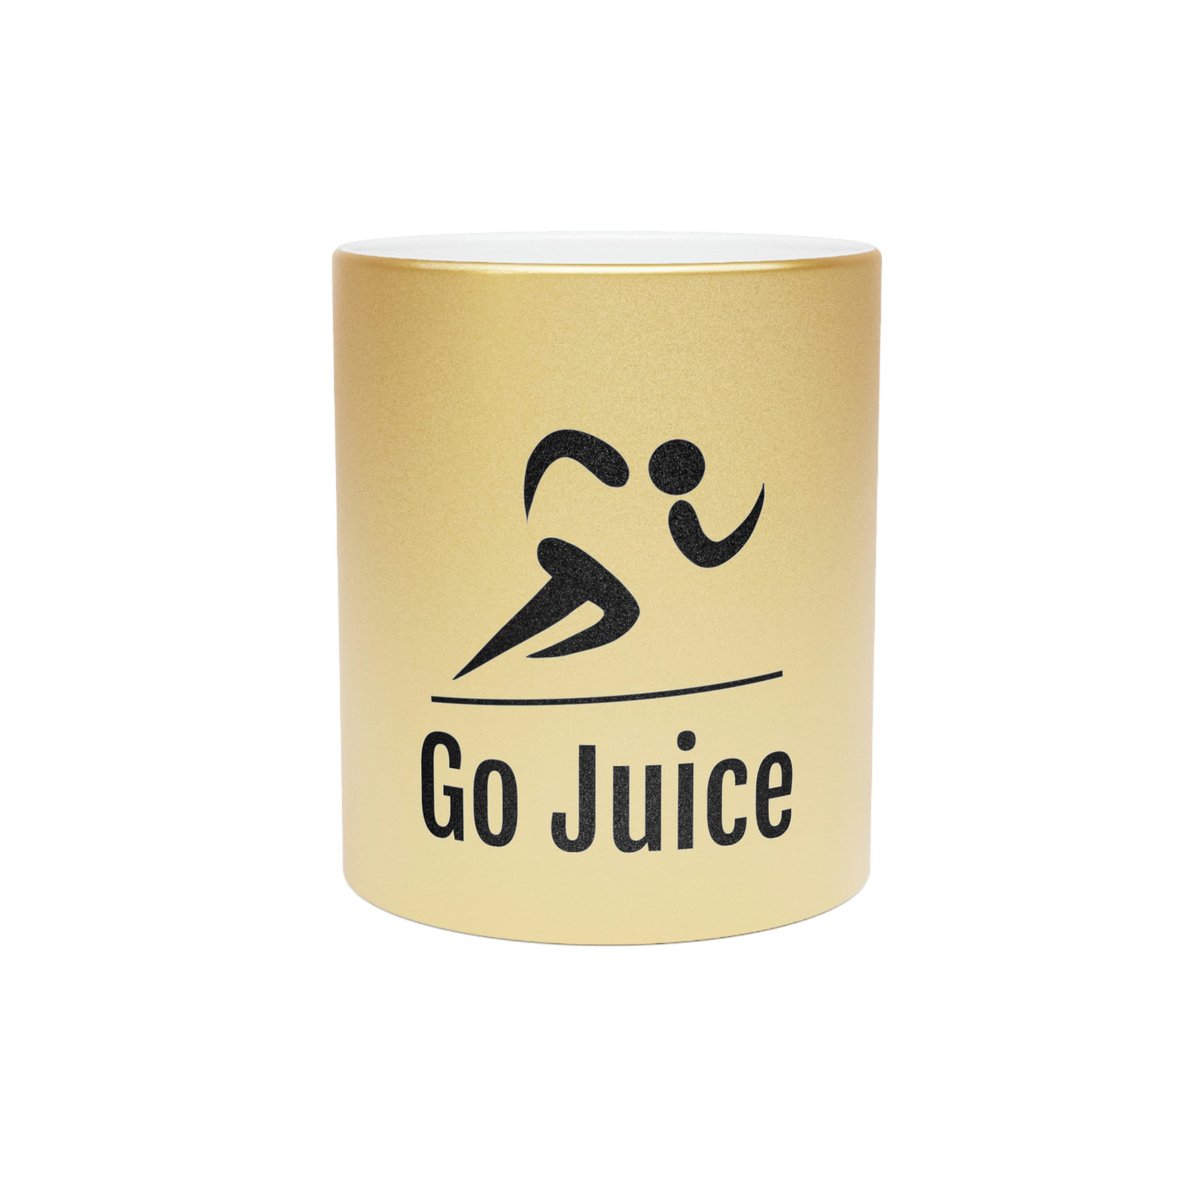 Go Juice Coffee Tea Mug, Gold Silver Coffee Mug etsy.me/3JkLYoi #coffeemug #teamug #goodmorningmug #positiveaffirmation #goodmorning #giftforher #gojuice #goldmug #goldcup